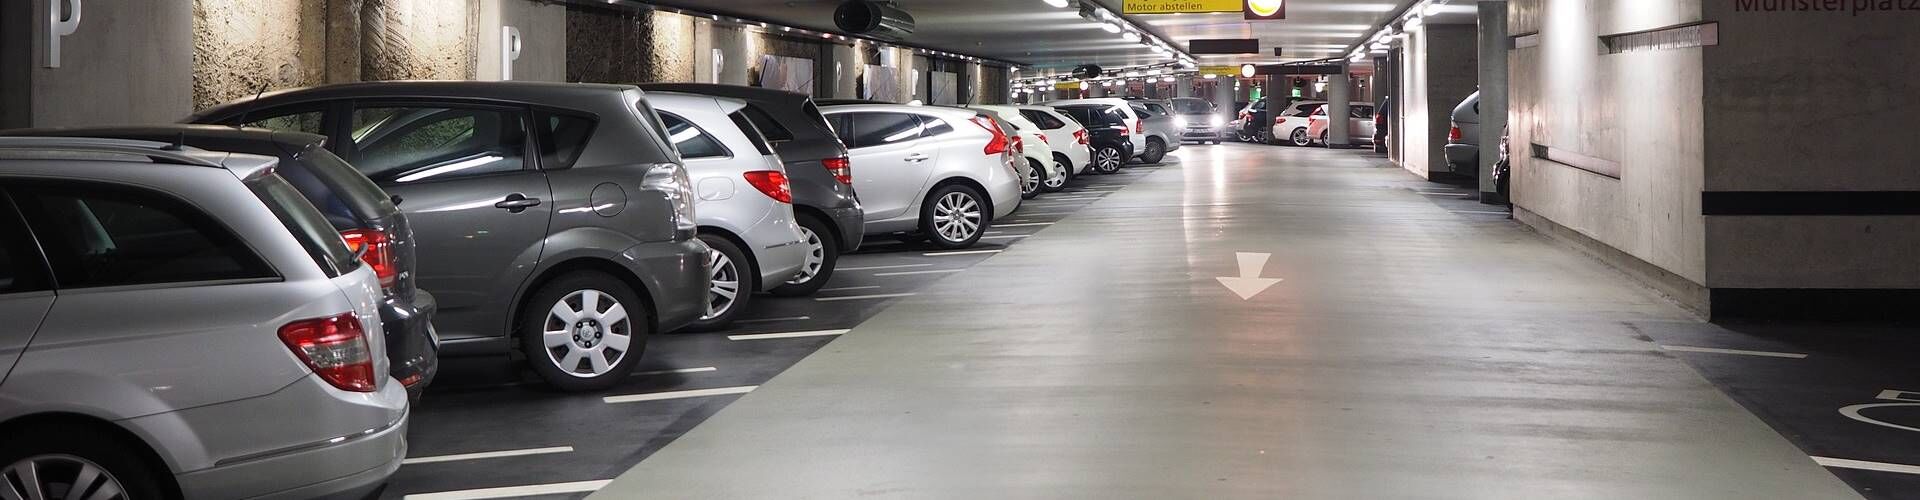 ¿Dónde aparcar en Alquézar?